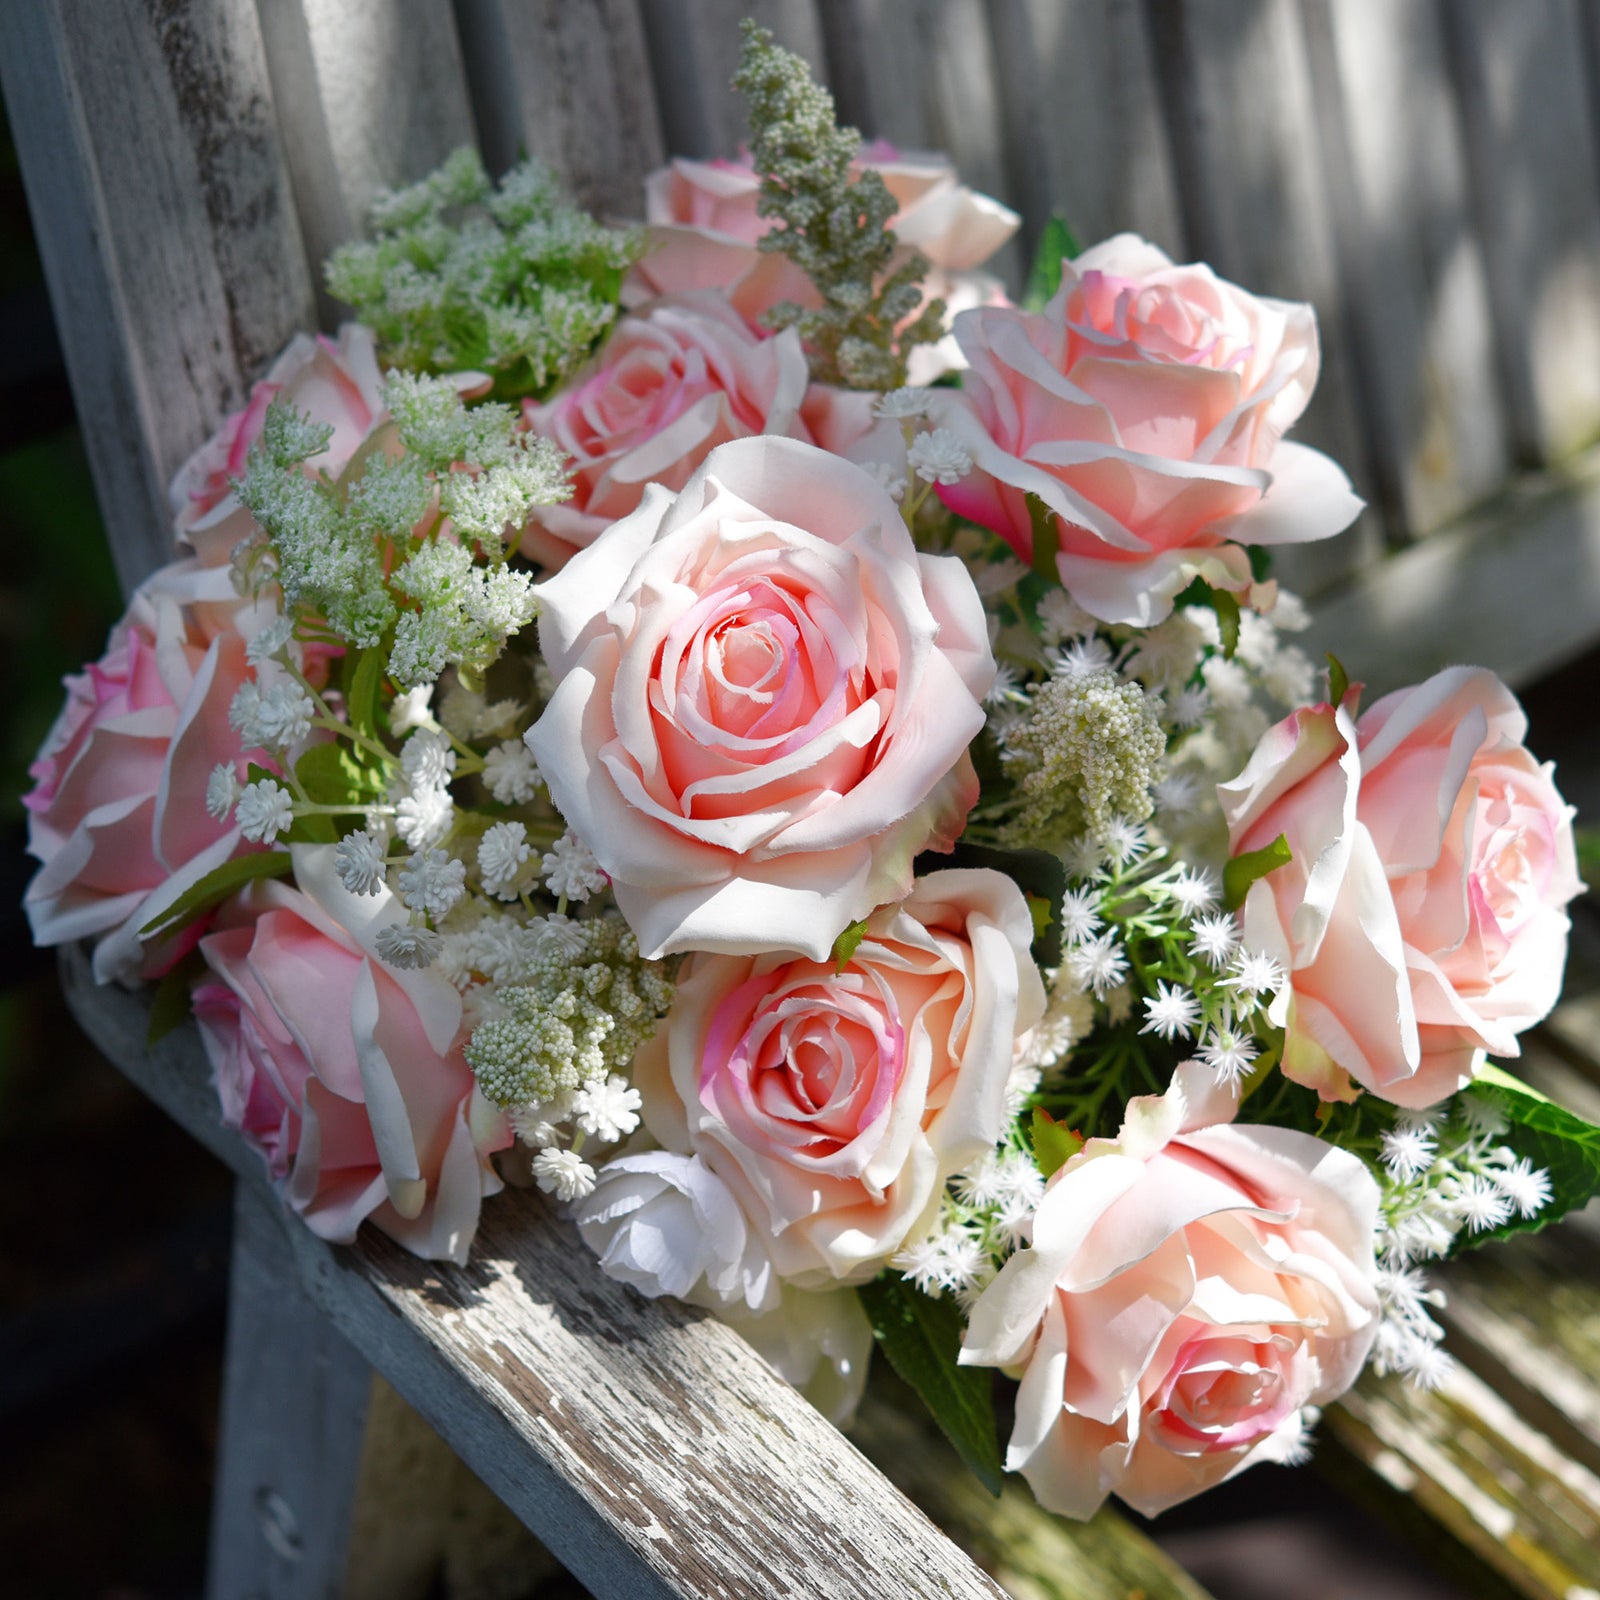 1 Bundle Full Bloom Silk Pink Roses Artificial Flowers, Home Décor, Wedding, Bridal FiveSeasonStuff